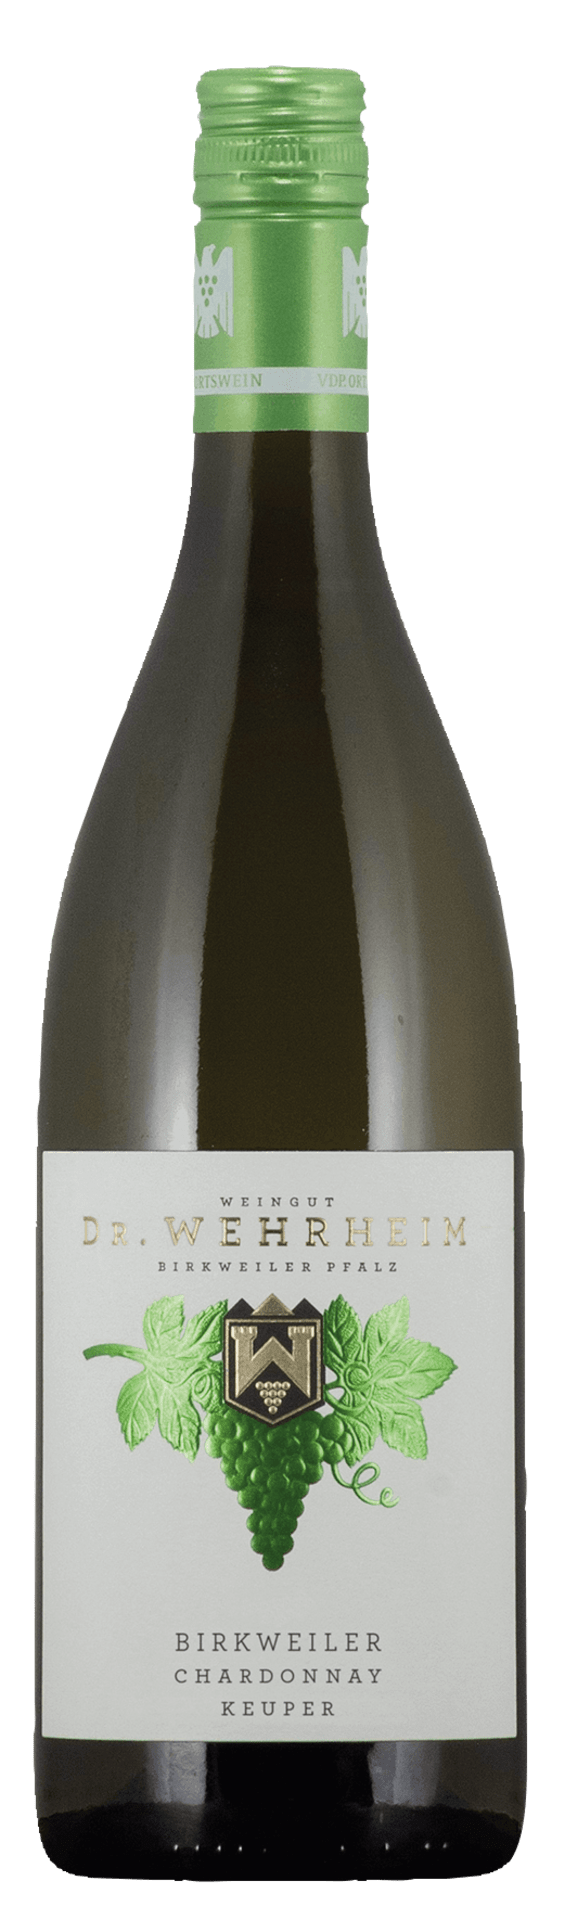 Birkweiler Keuper Chardonnay 